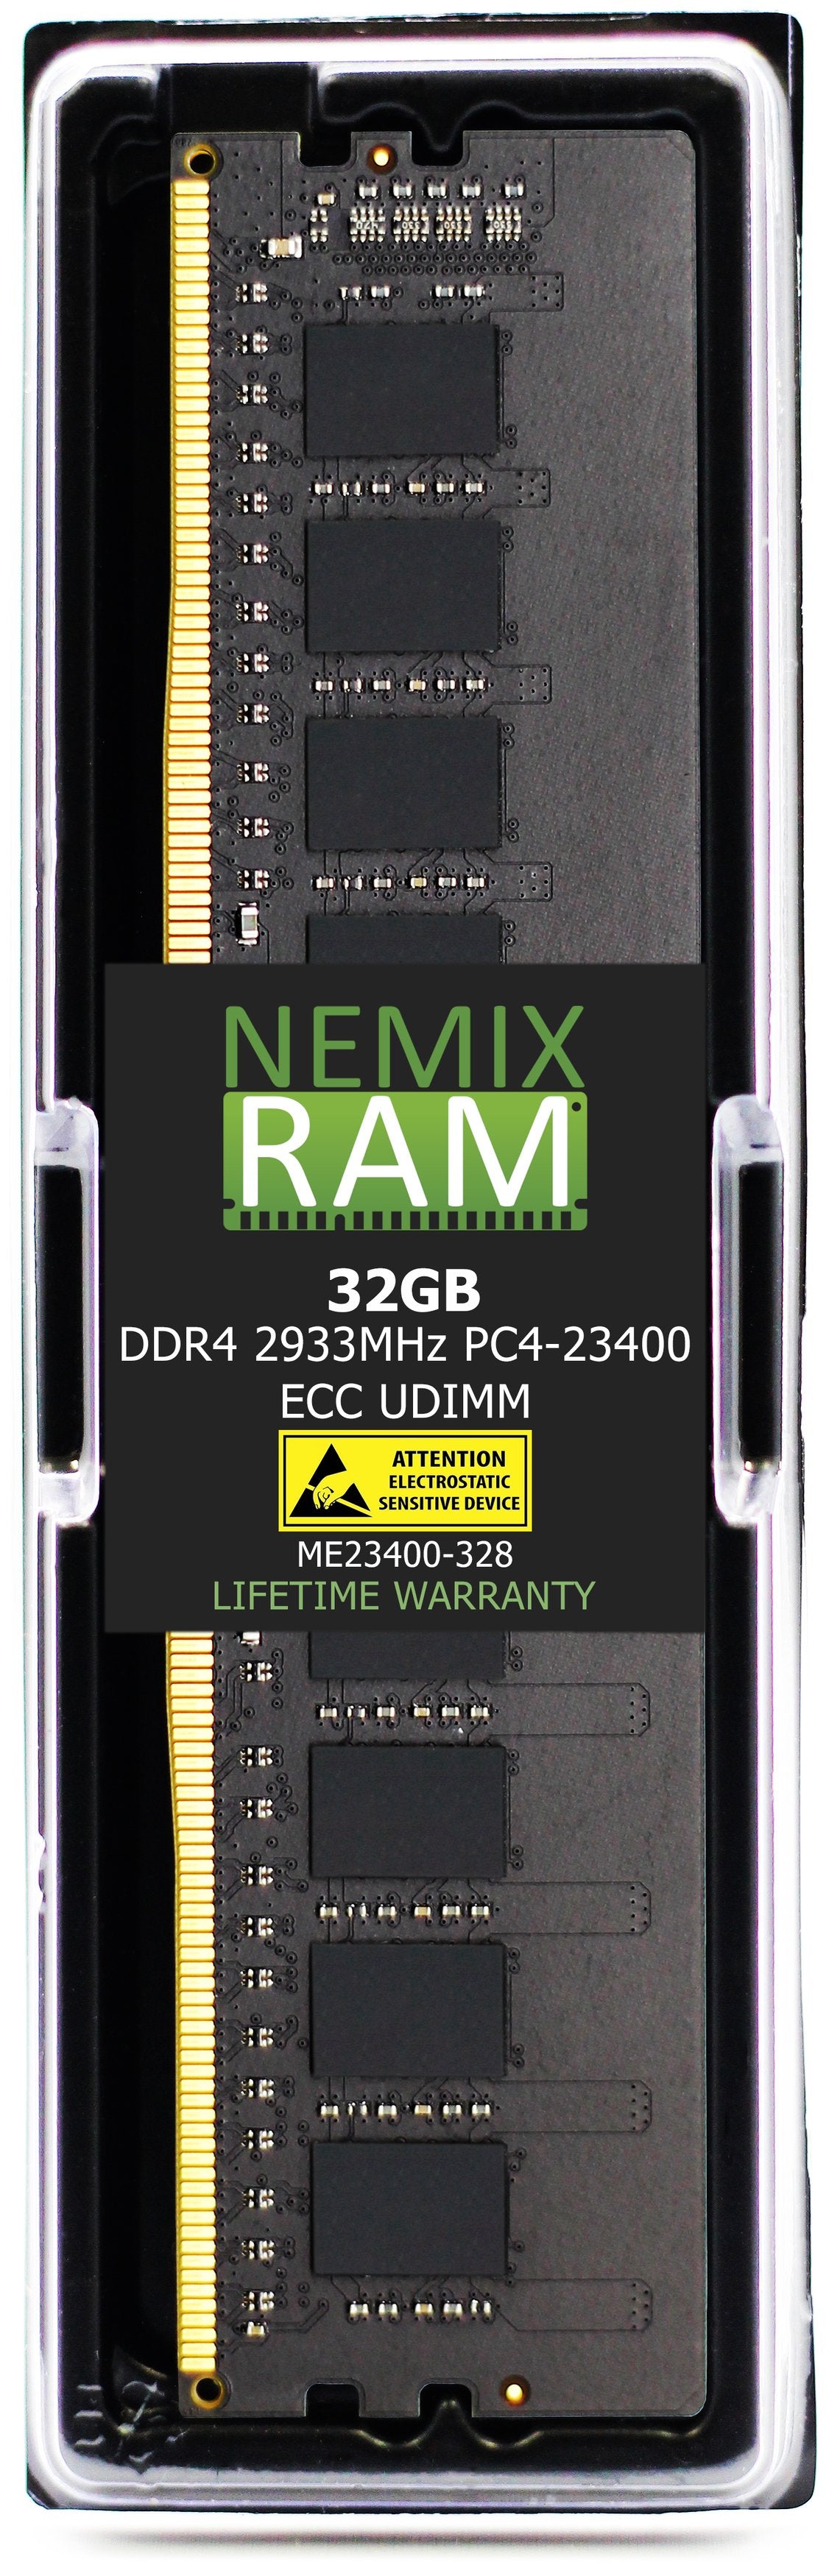 32GB DDR4 2933MHZ PC4-23400 ECC UDIMM Compatible with Supermicro MEM-DR432MD-EU29